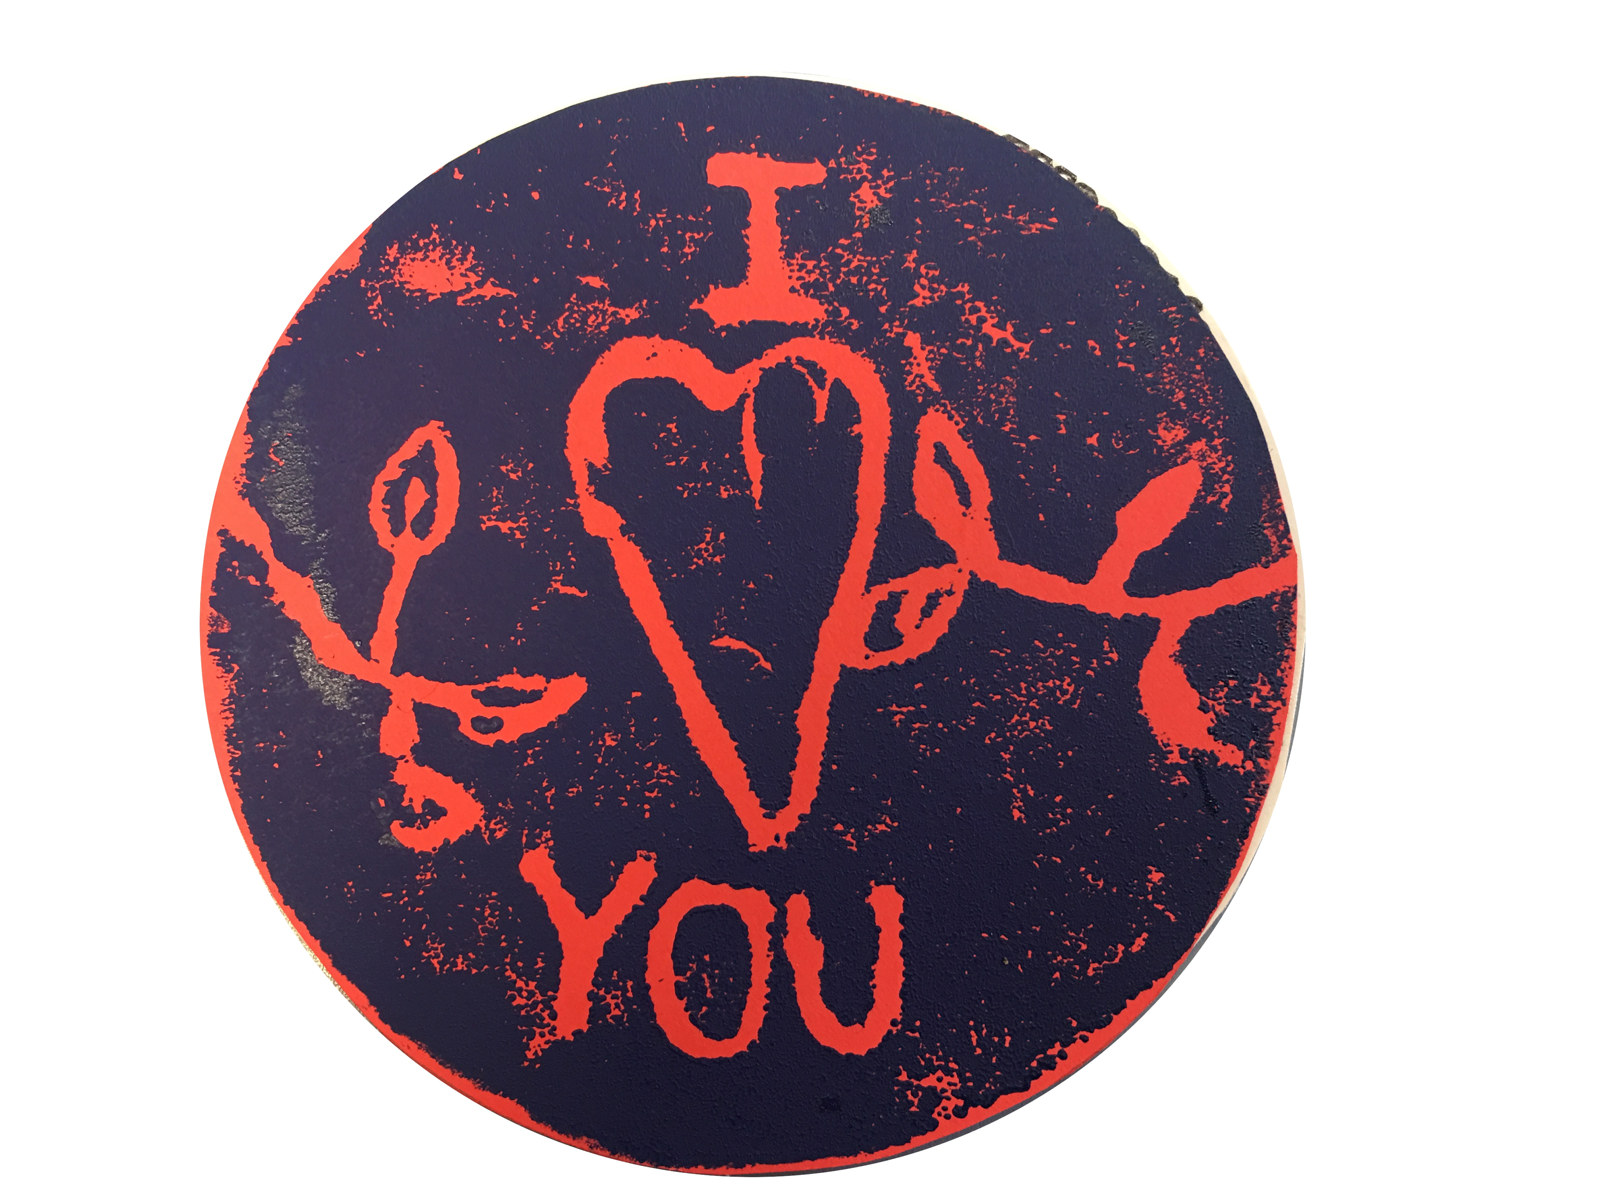 Artwork on paper or card depicting student interpretation of coin-shaped love token.